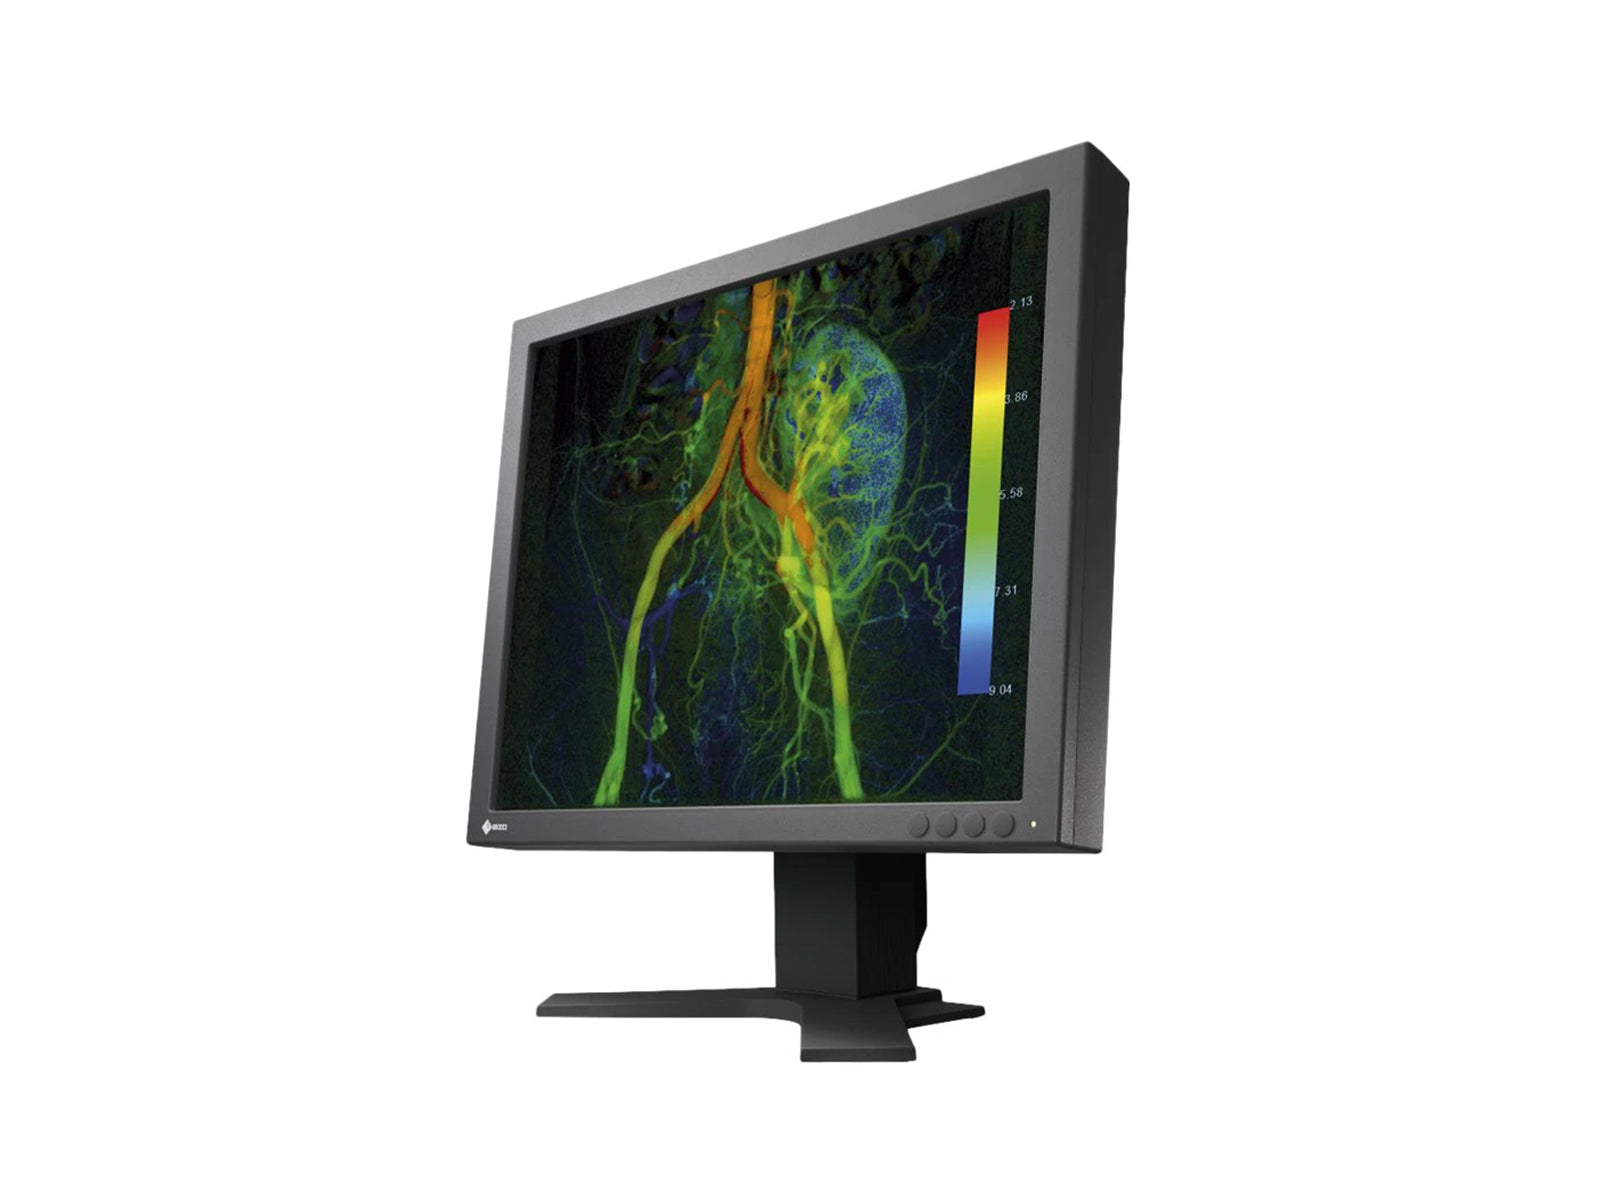 Eizo CuratOR EX190 1MP 19" LCD Color Surgical Medical Display Monitor (EX190-S) Monitors.com 